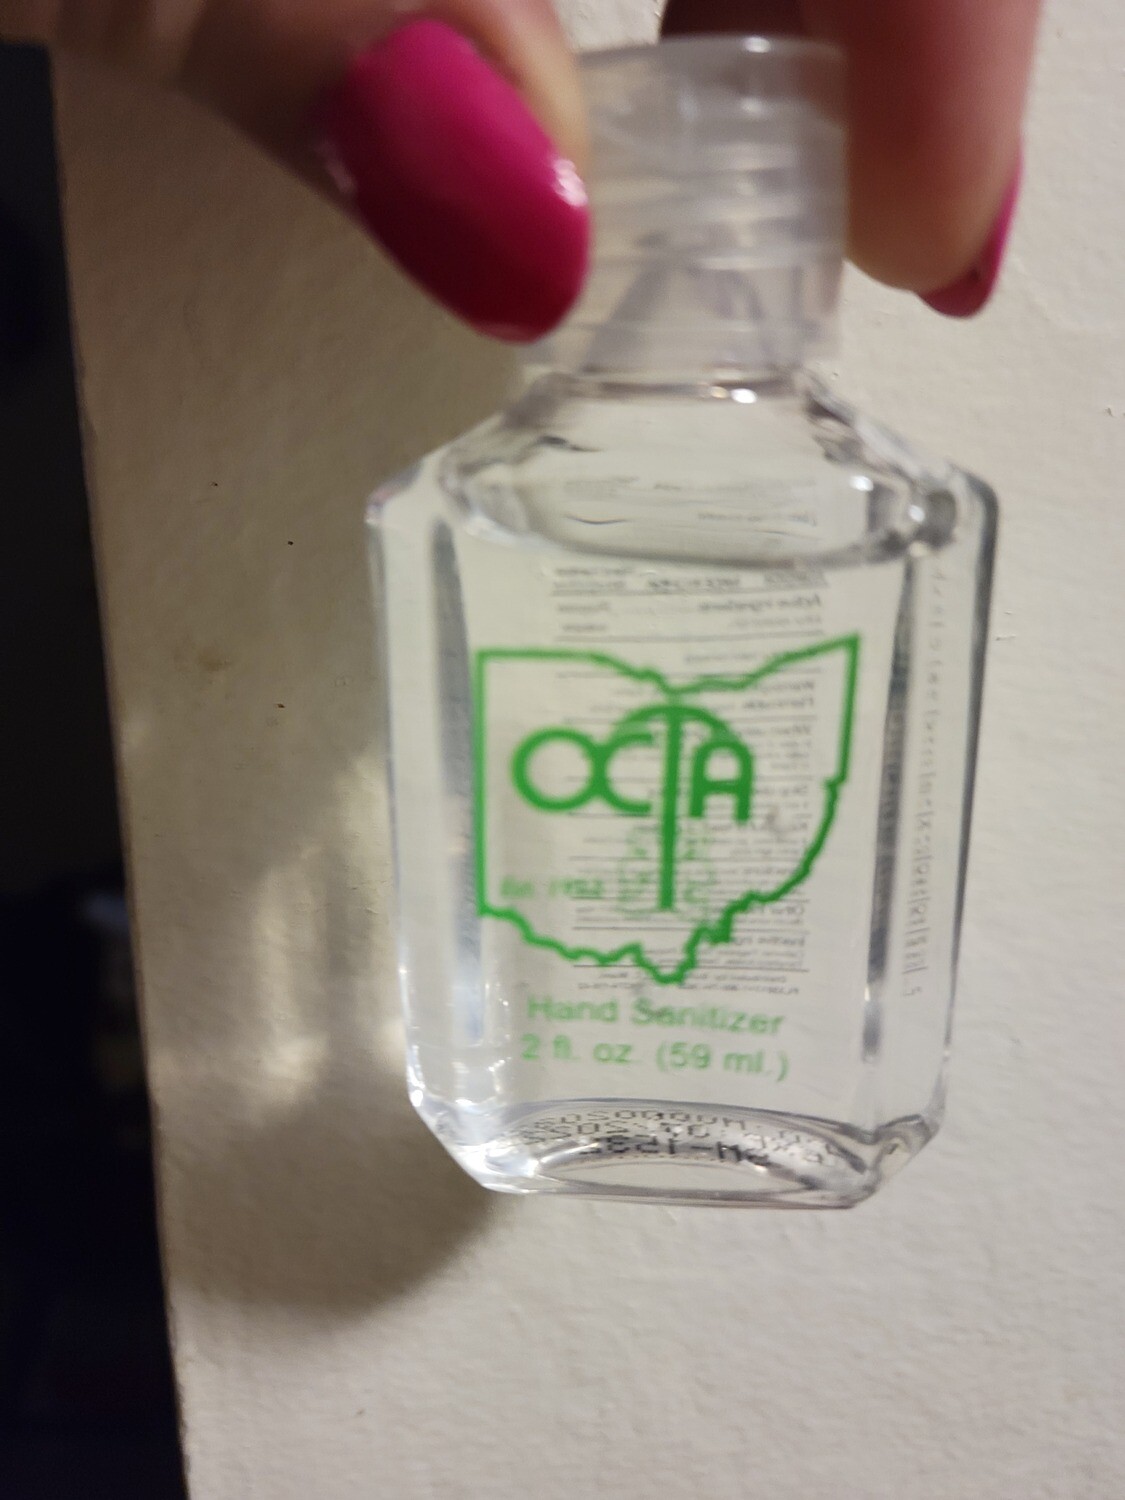 OCTA Hand Sanitizer